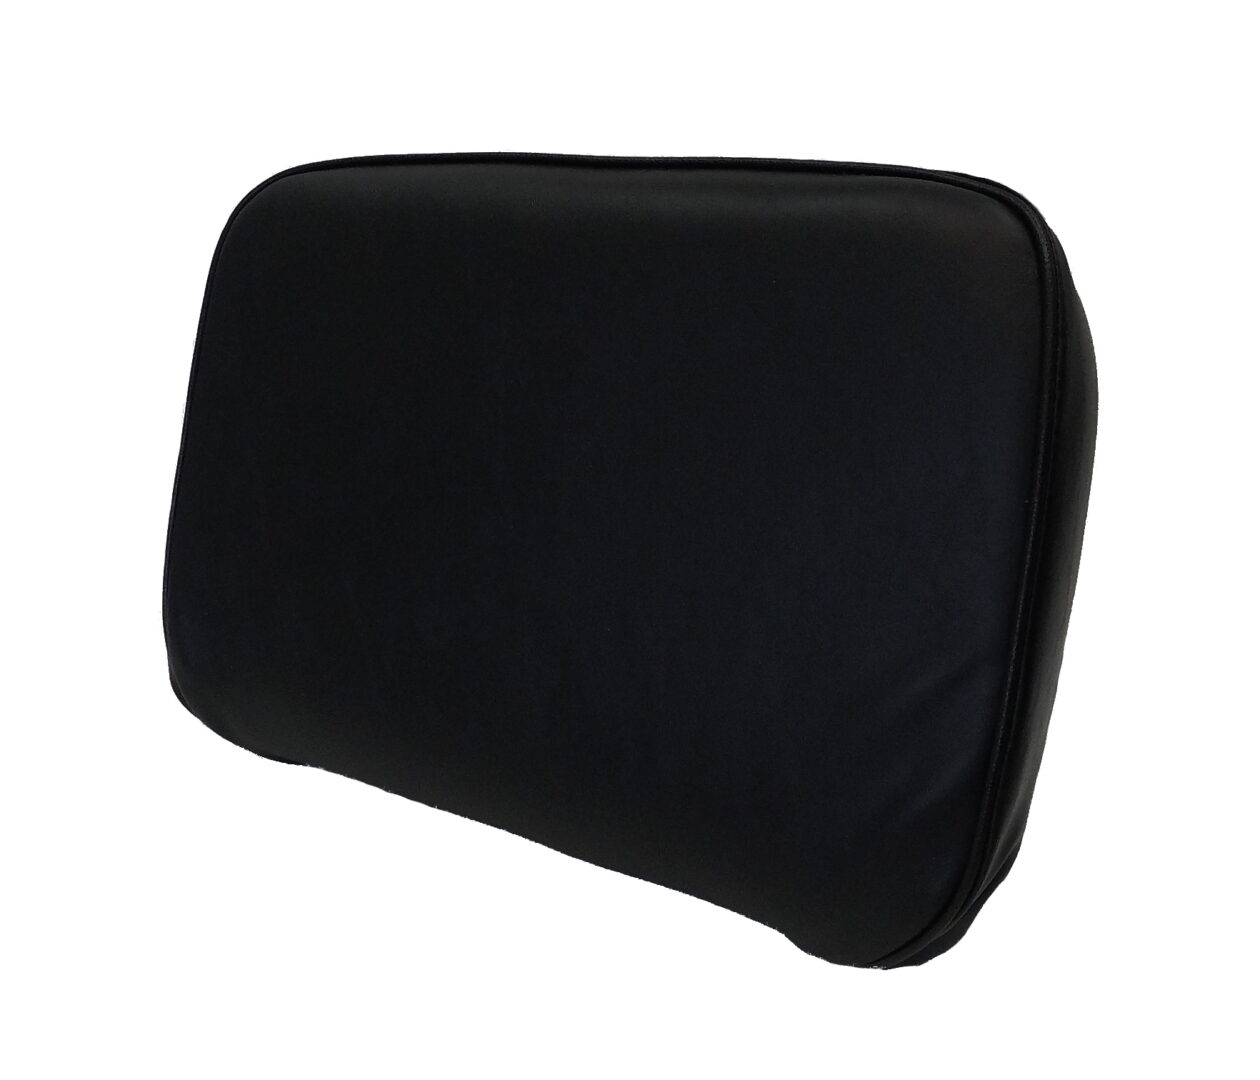 STD BK - Standard Back Cushion